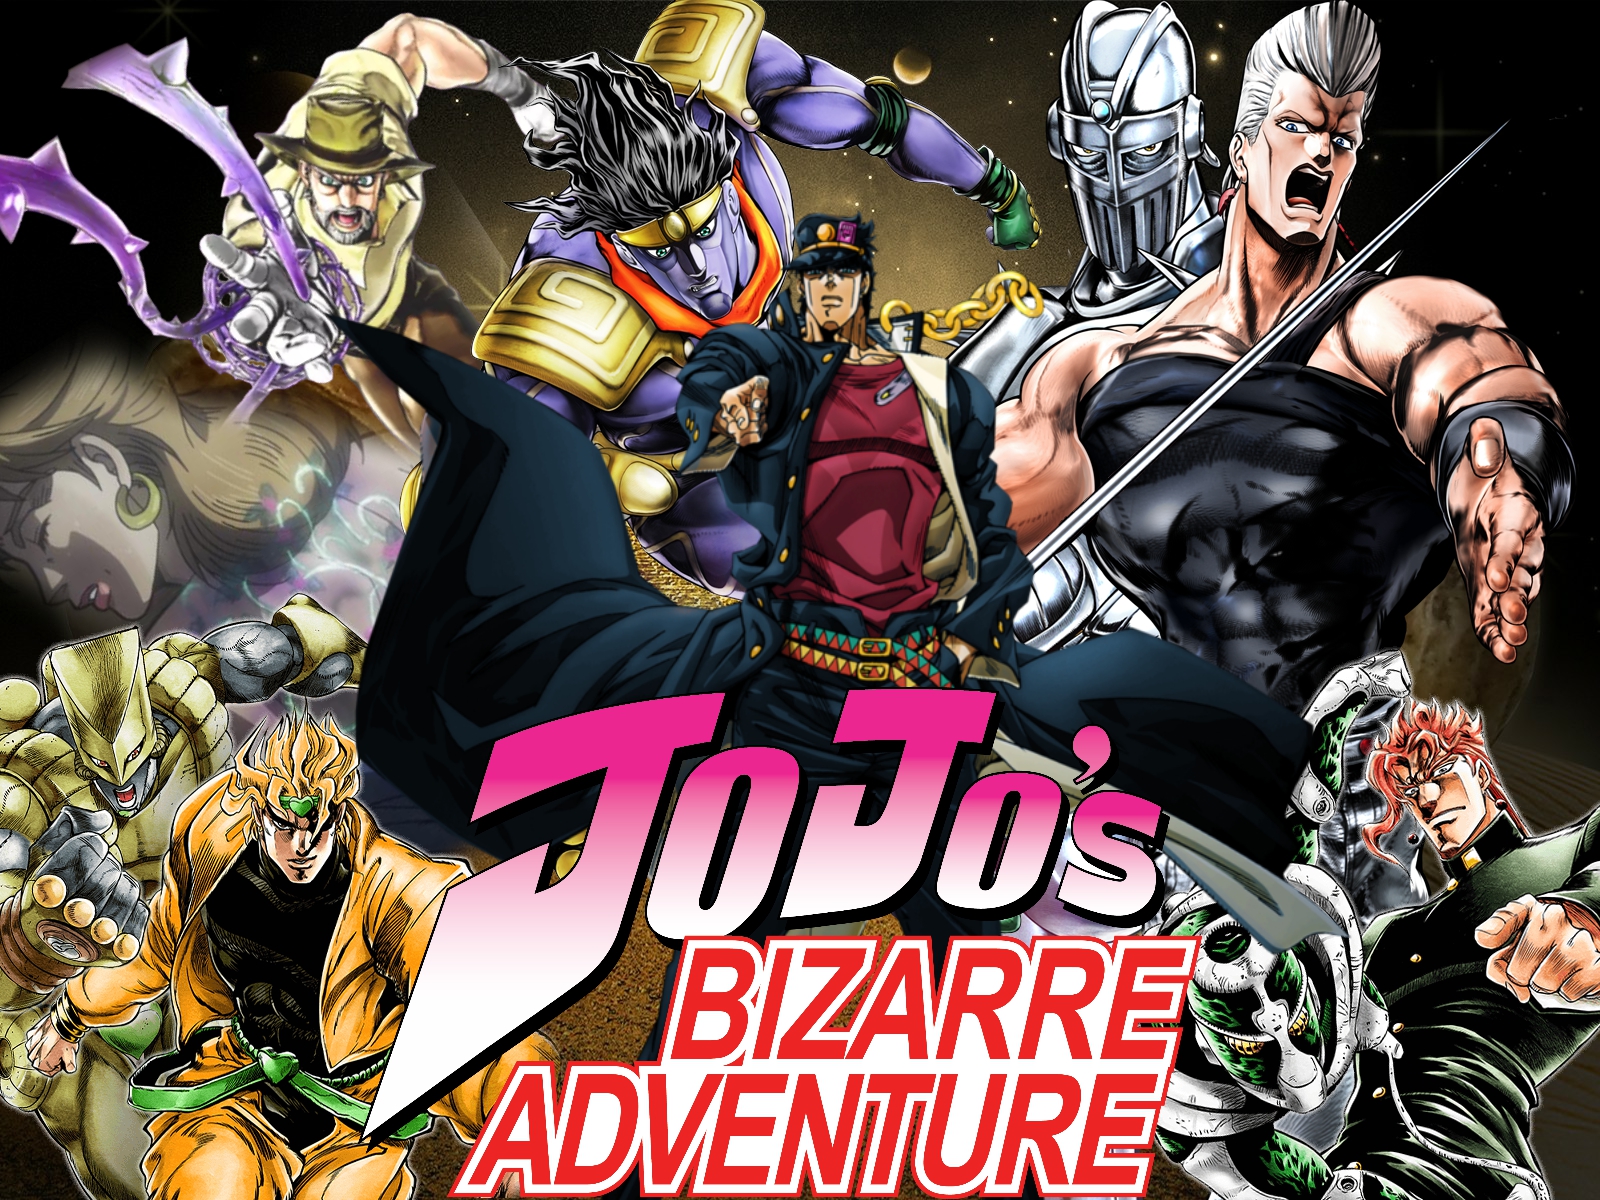 Anime On ComicBook.com on X: JoJo's Bizarre Adventure's JOJO